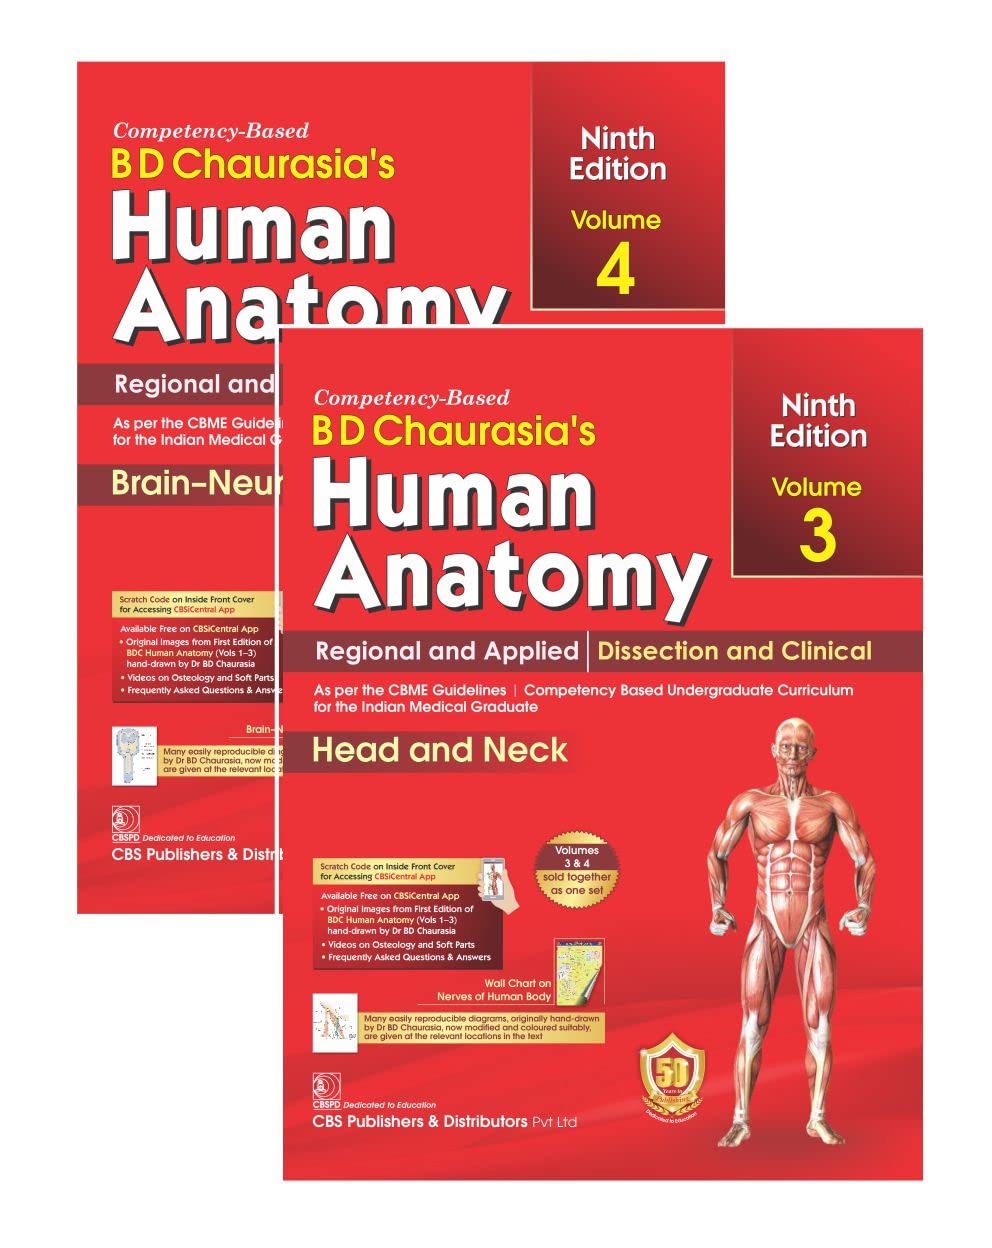 Human Anatomy, 9th Edition 2023, Vol.3 & 4 Regional and Applied Dissection and Clinical: Head & Neck, Vol.3 Brain-Neuroanatomy, Vol.4